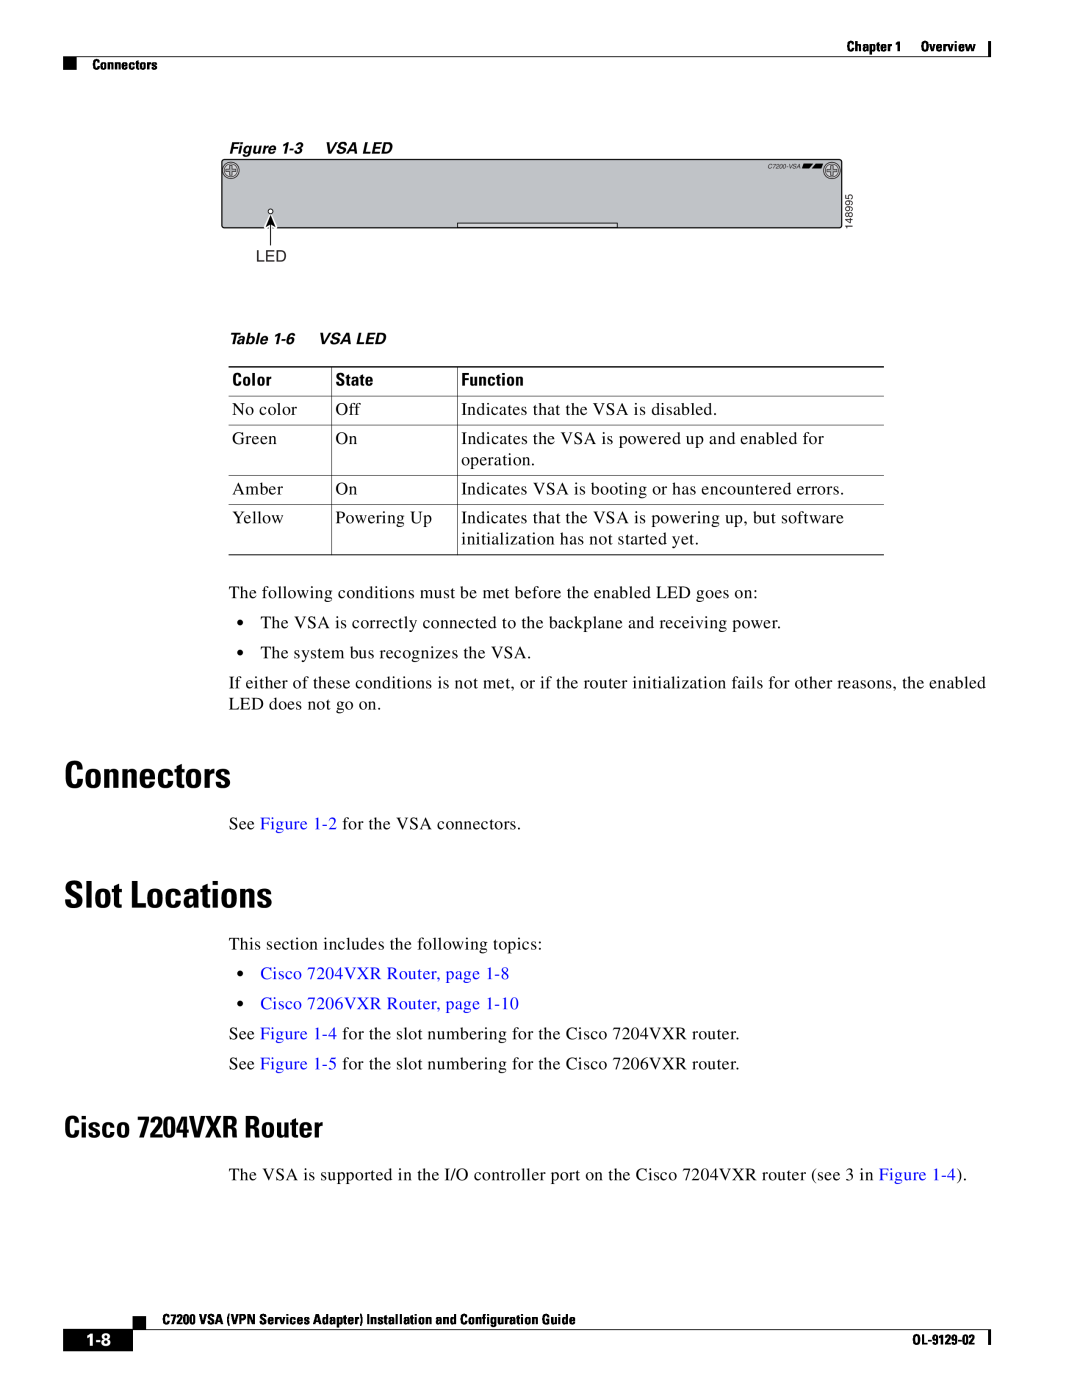 Cisco Systems C7200 manual Connectors, Slot Locations, Cisco 7204VXR Router 